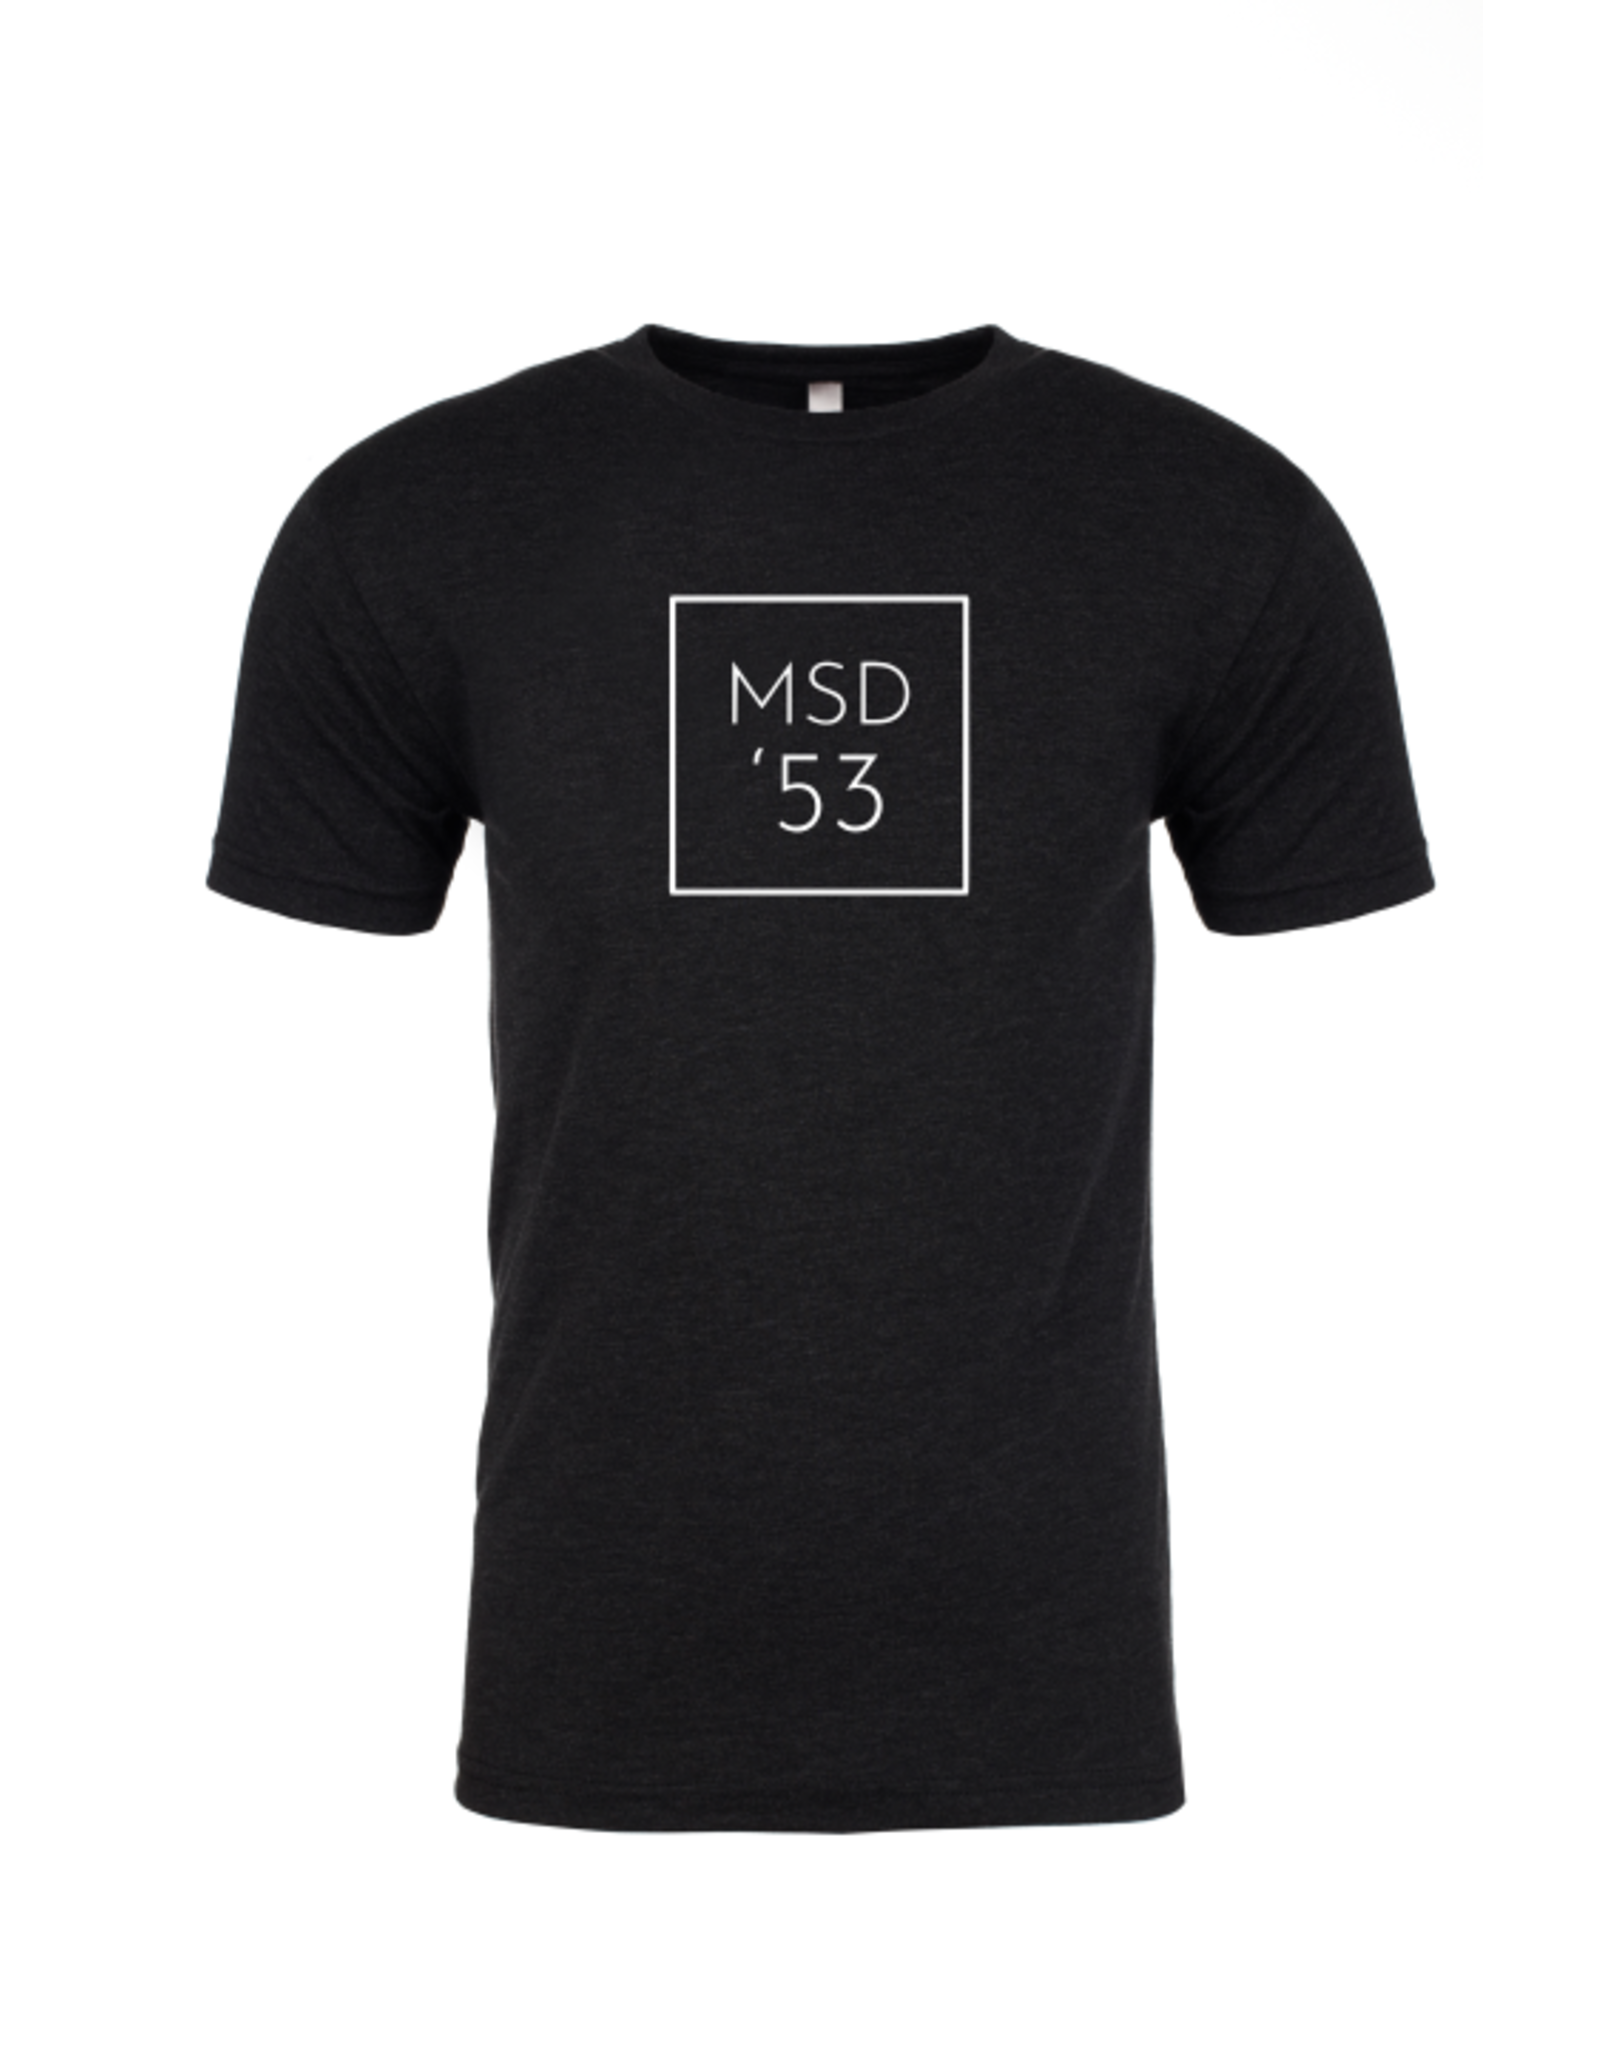 Next Level Apparel Martin 53 T-shirt